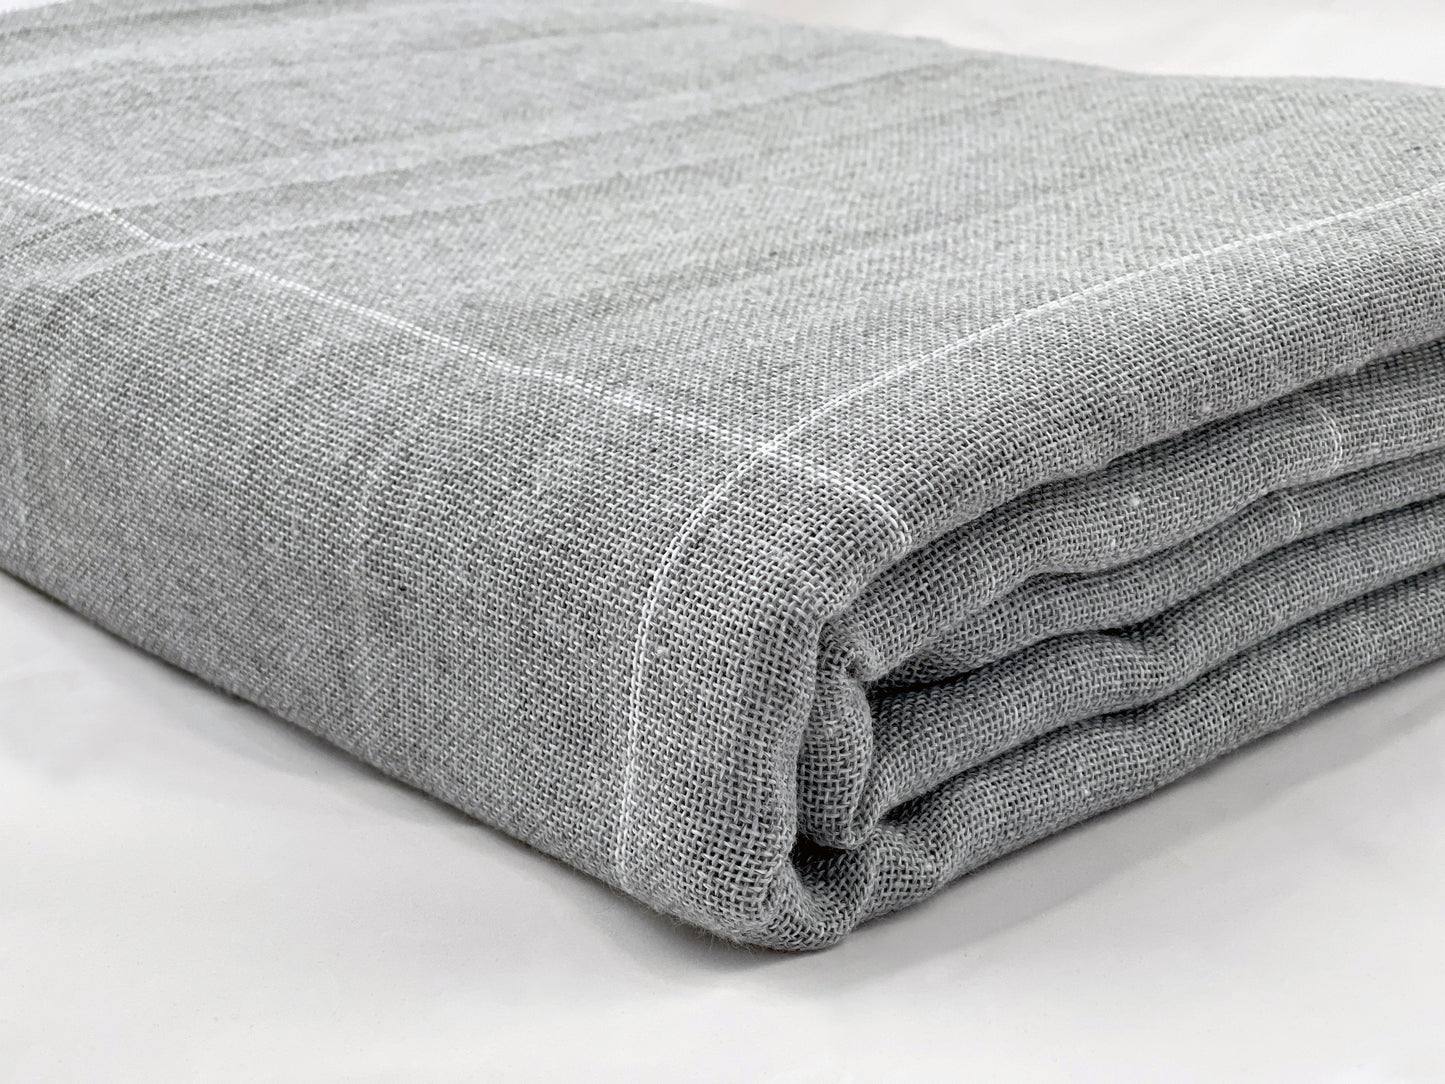 Gray white woven final backing cloth